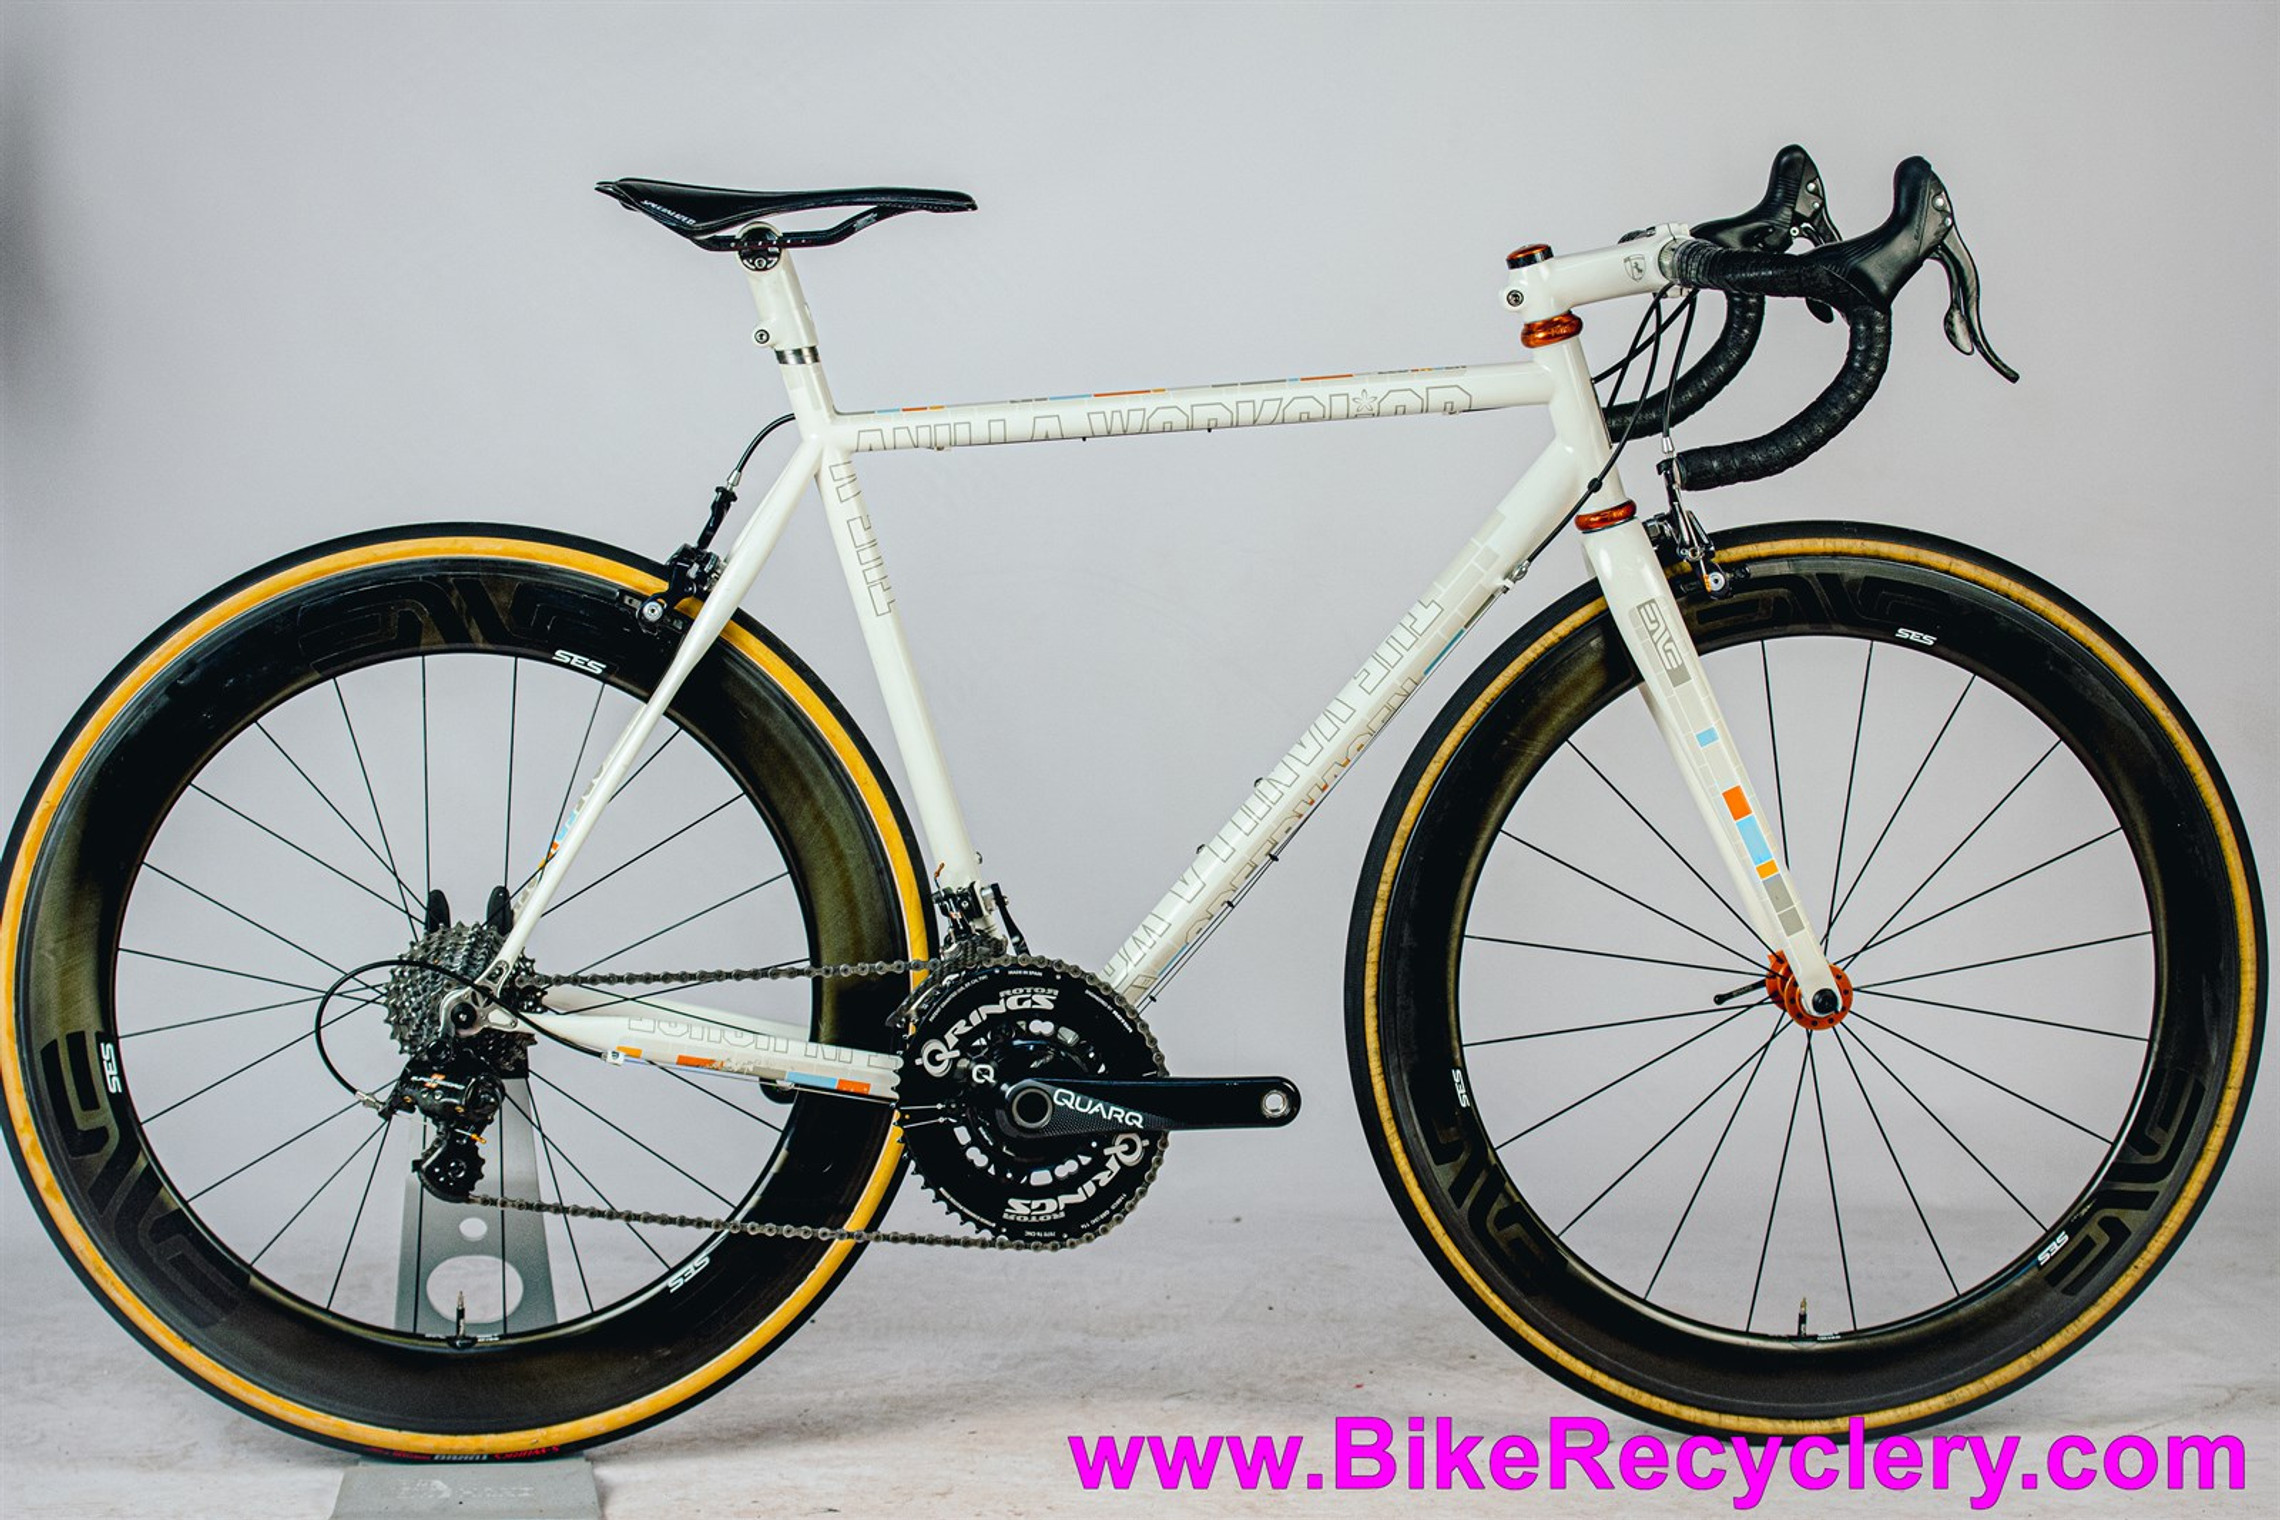 Vanilla Speedvagen Steel Road Bike 54cm - ENVE SES 6.7 - Chris King Mango Kit - Campagnolo Super Record 11s - Quarq - ZIPP - SWorks - 16lbs (EXC++)